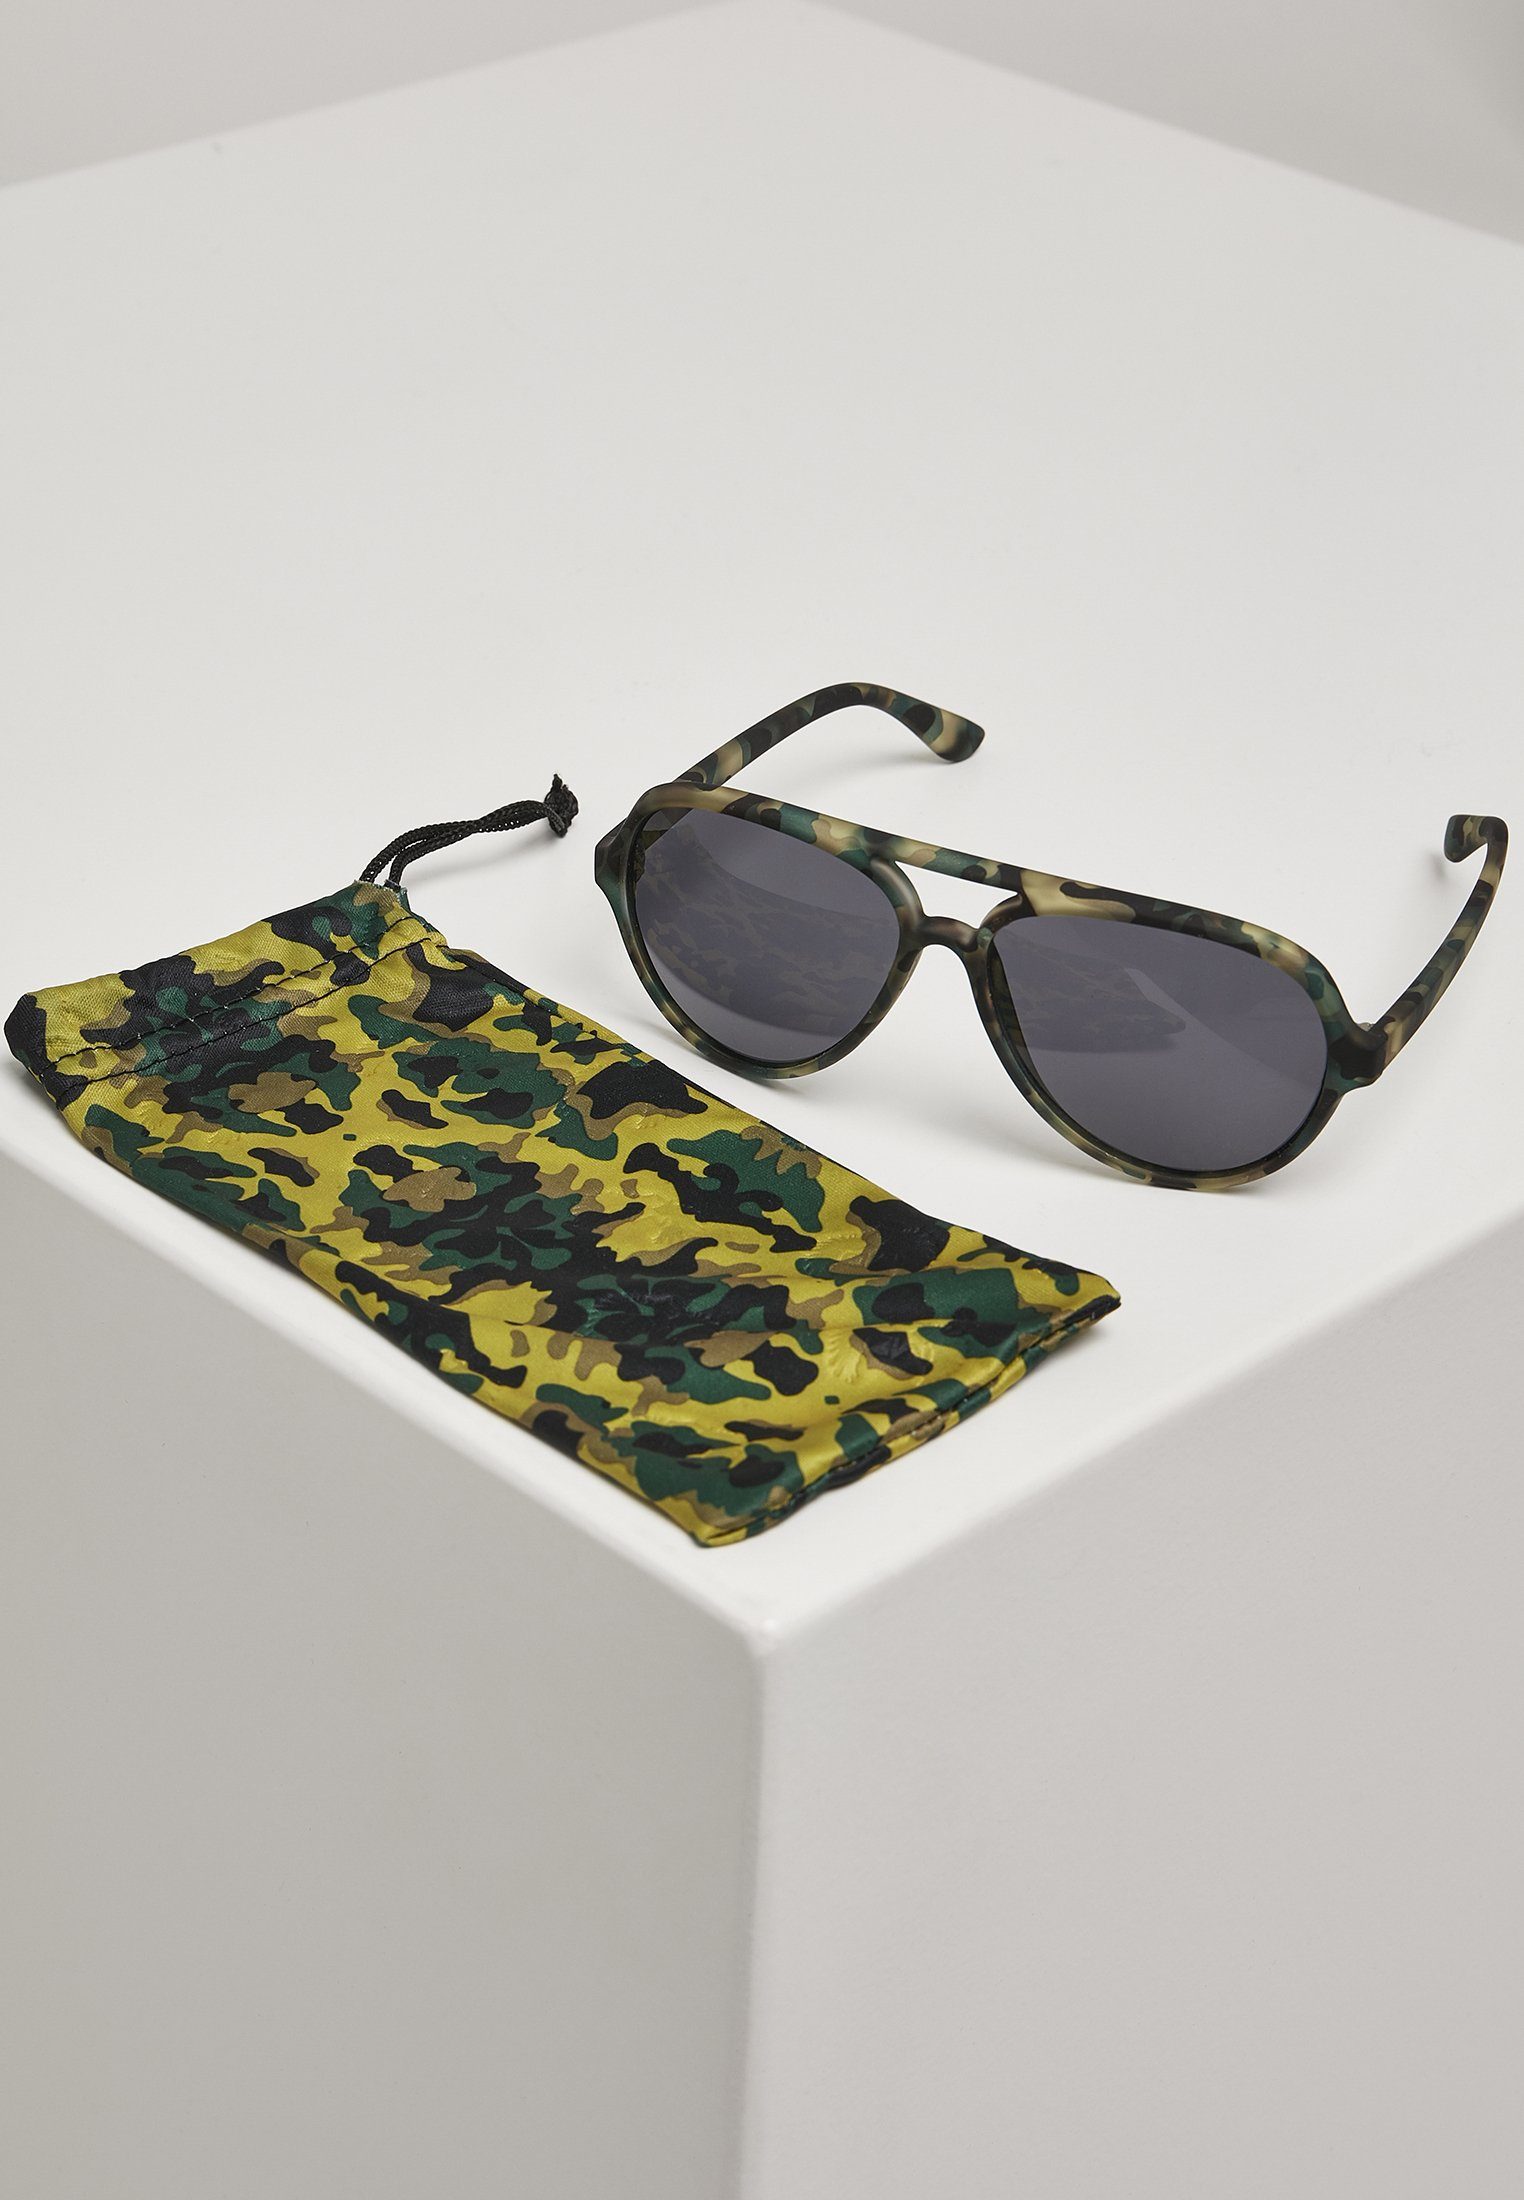 March Sunglasses camouflage MSTRDS Sonnenbrille Accessoires